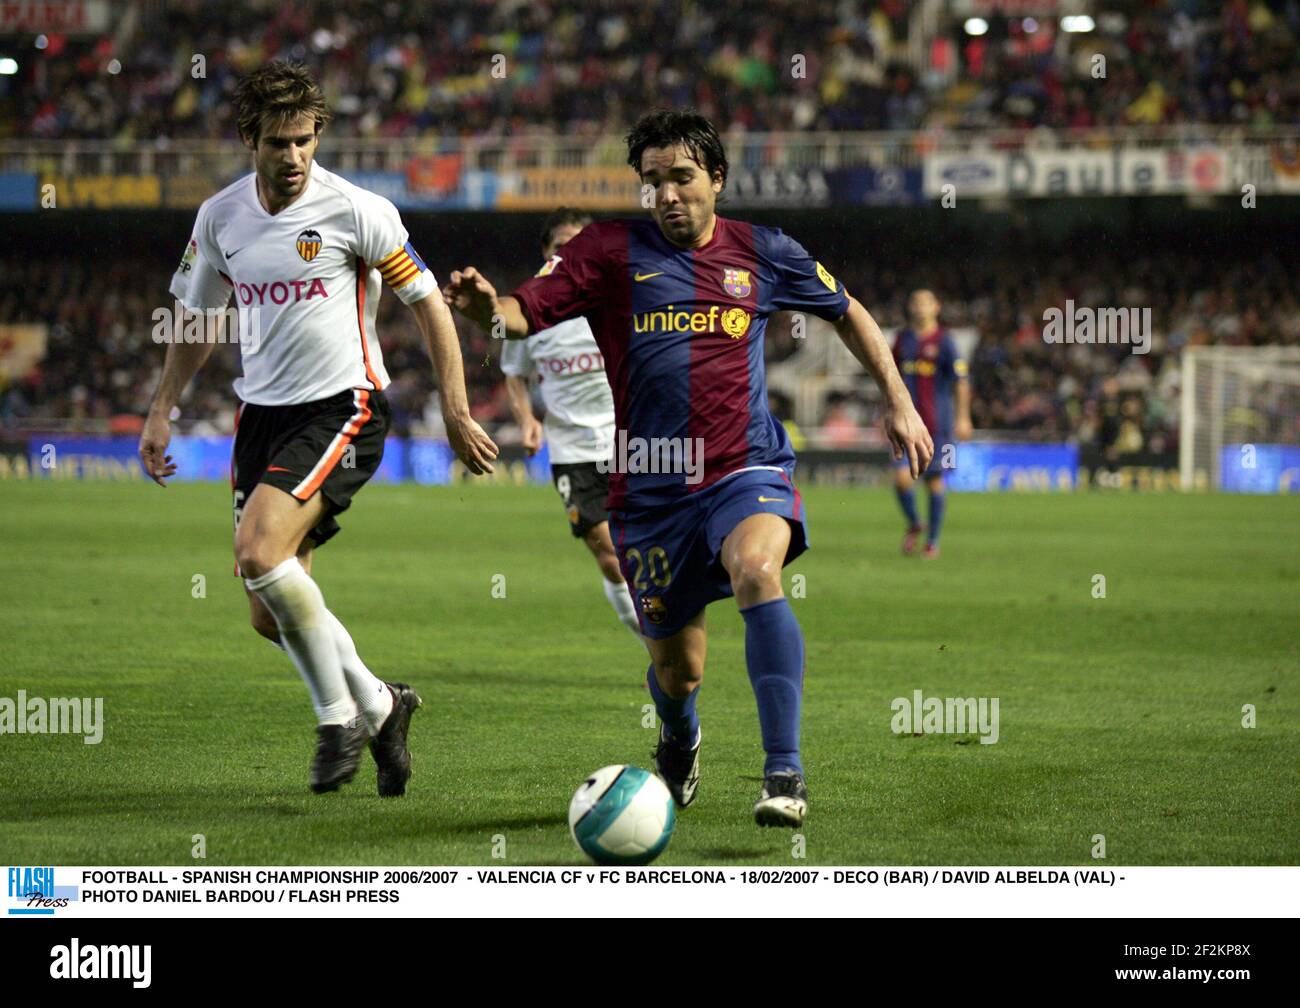 FOOTBALL - SPANISH CHAMPIONSHIP 2006/2007 - VALENCIA CF v FC BARCELONA - 18/02/2007 - DECO (BAR) / DAVID ALBELDA (VAL) - PHOTO DANIEL BARDOU / FLASH PRESS Stock Photo